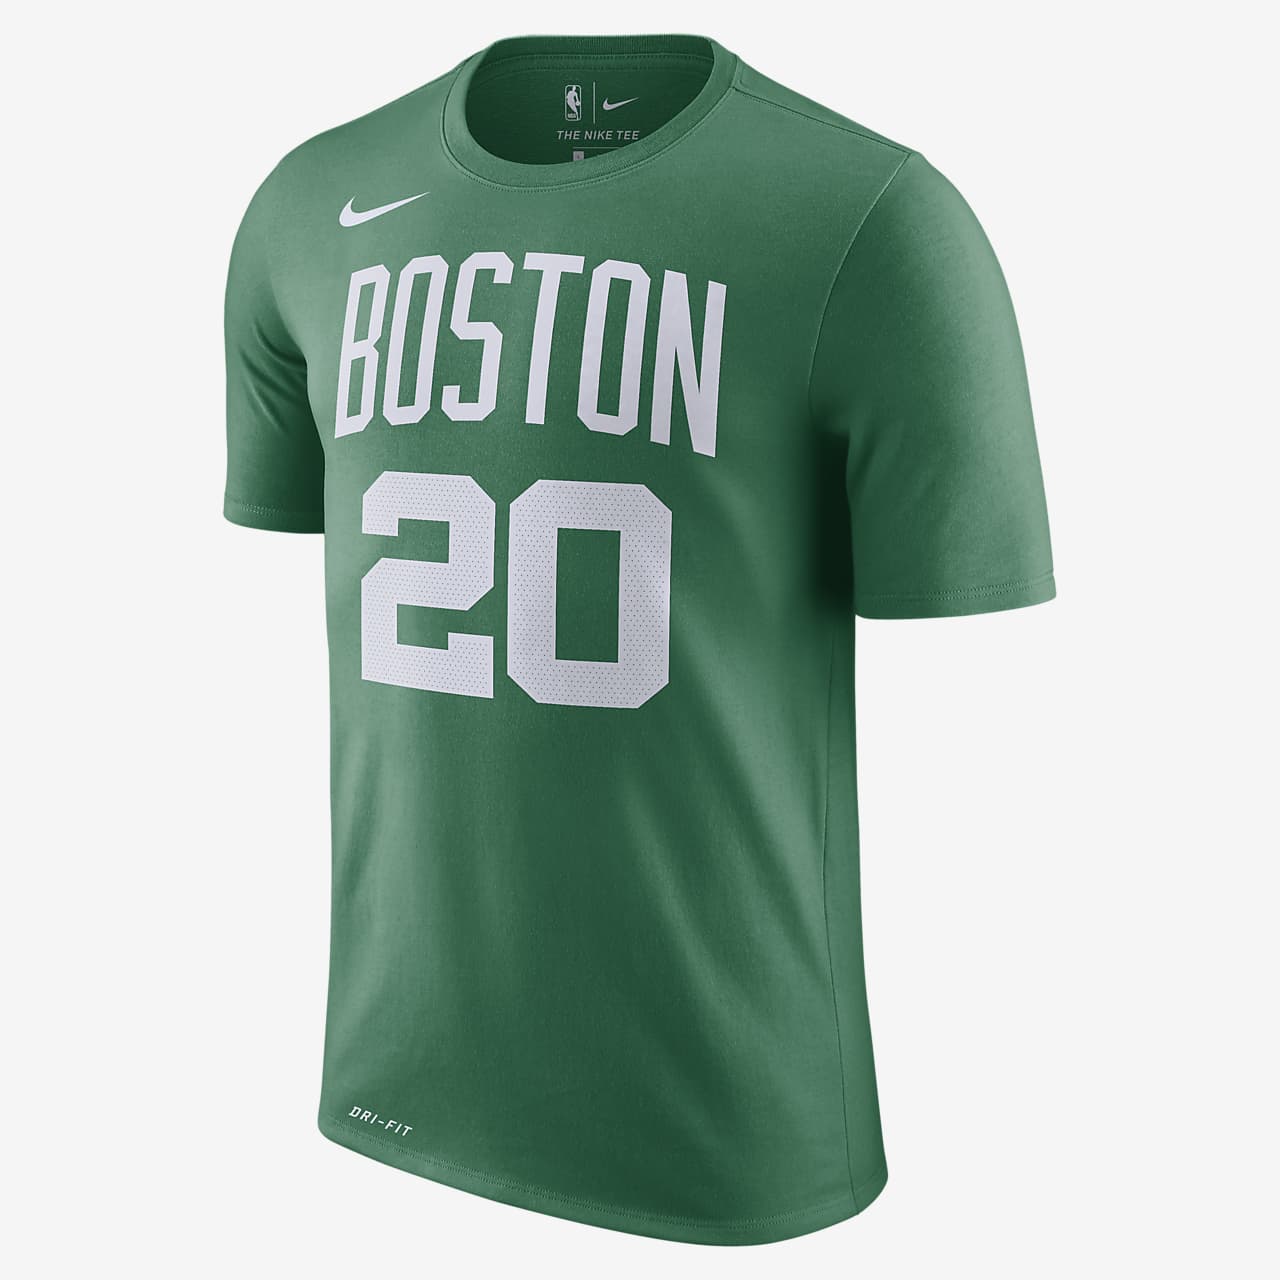 Gordon Hayward Boston Celtics Nike Dri-FIT Men's NBA T-Shirt